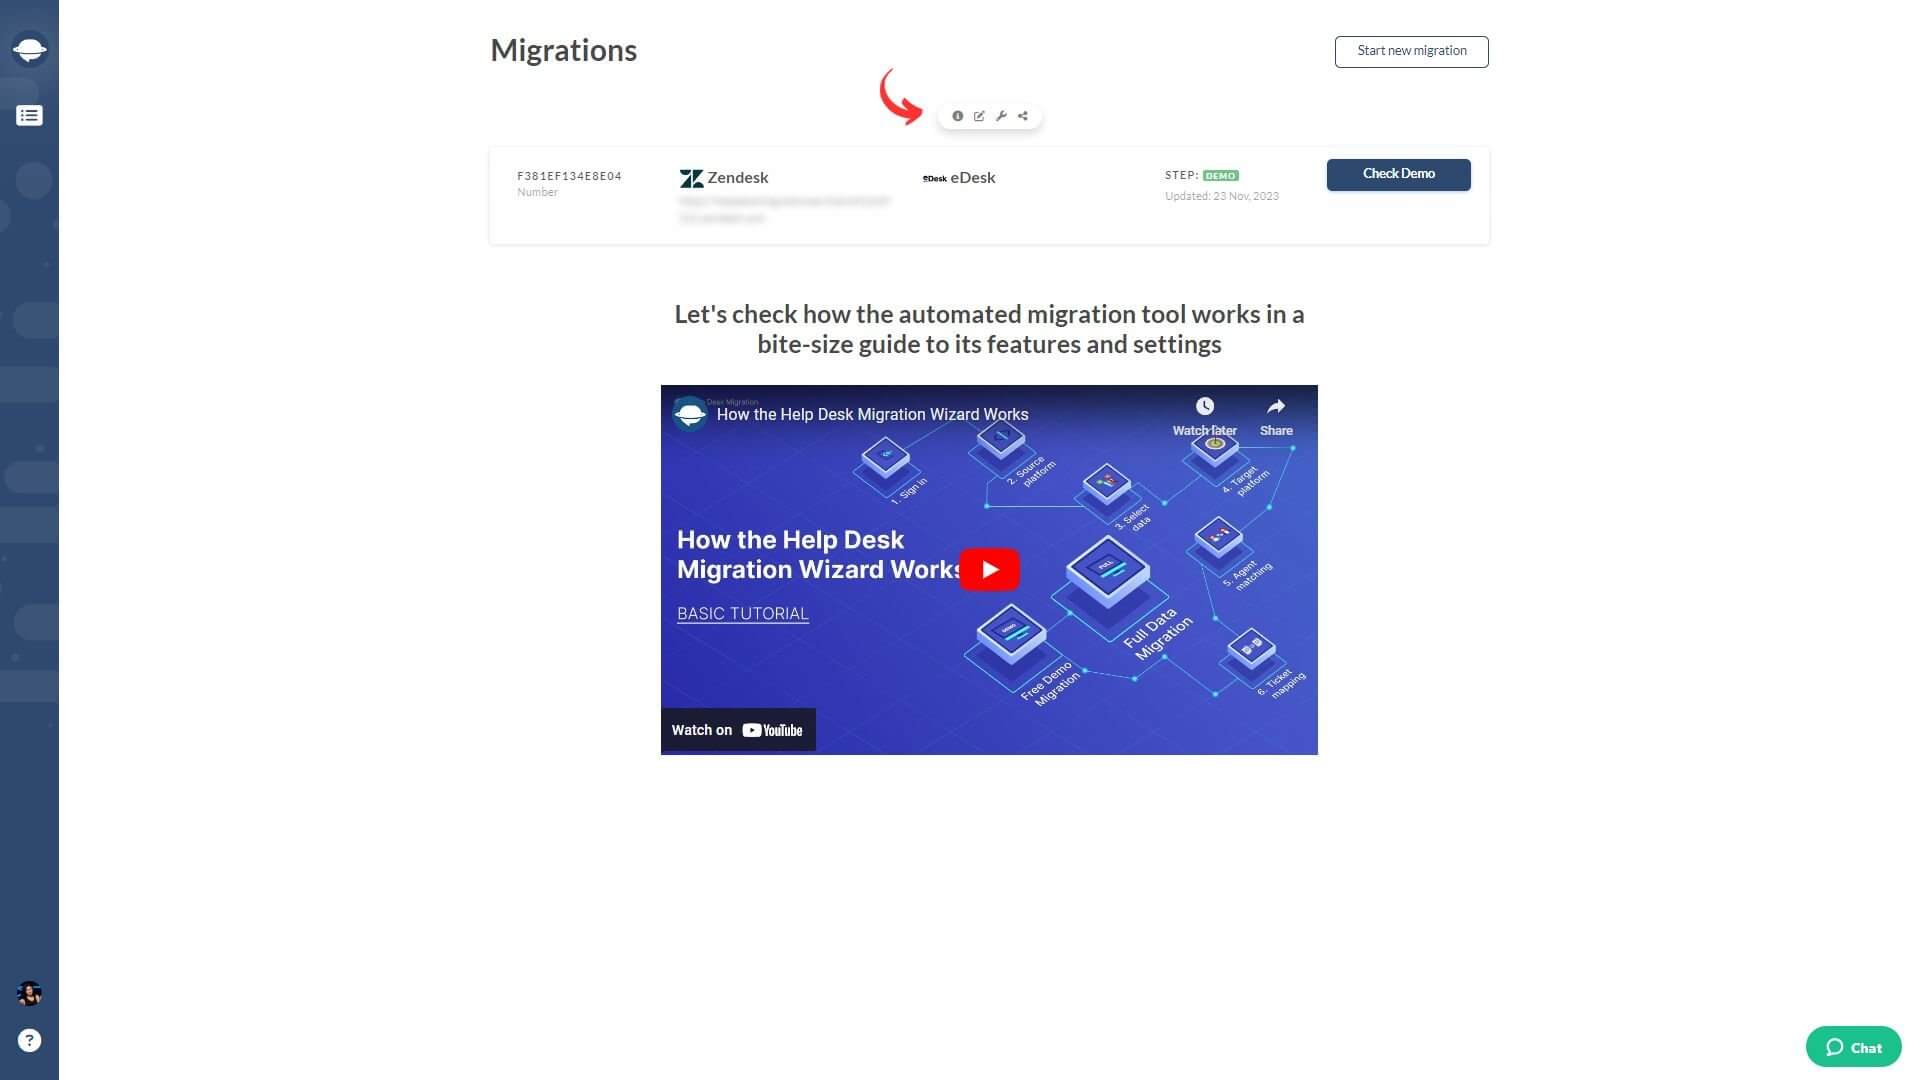 Migration Wizard Capabilities